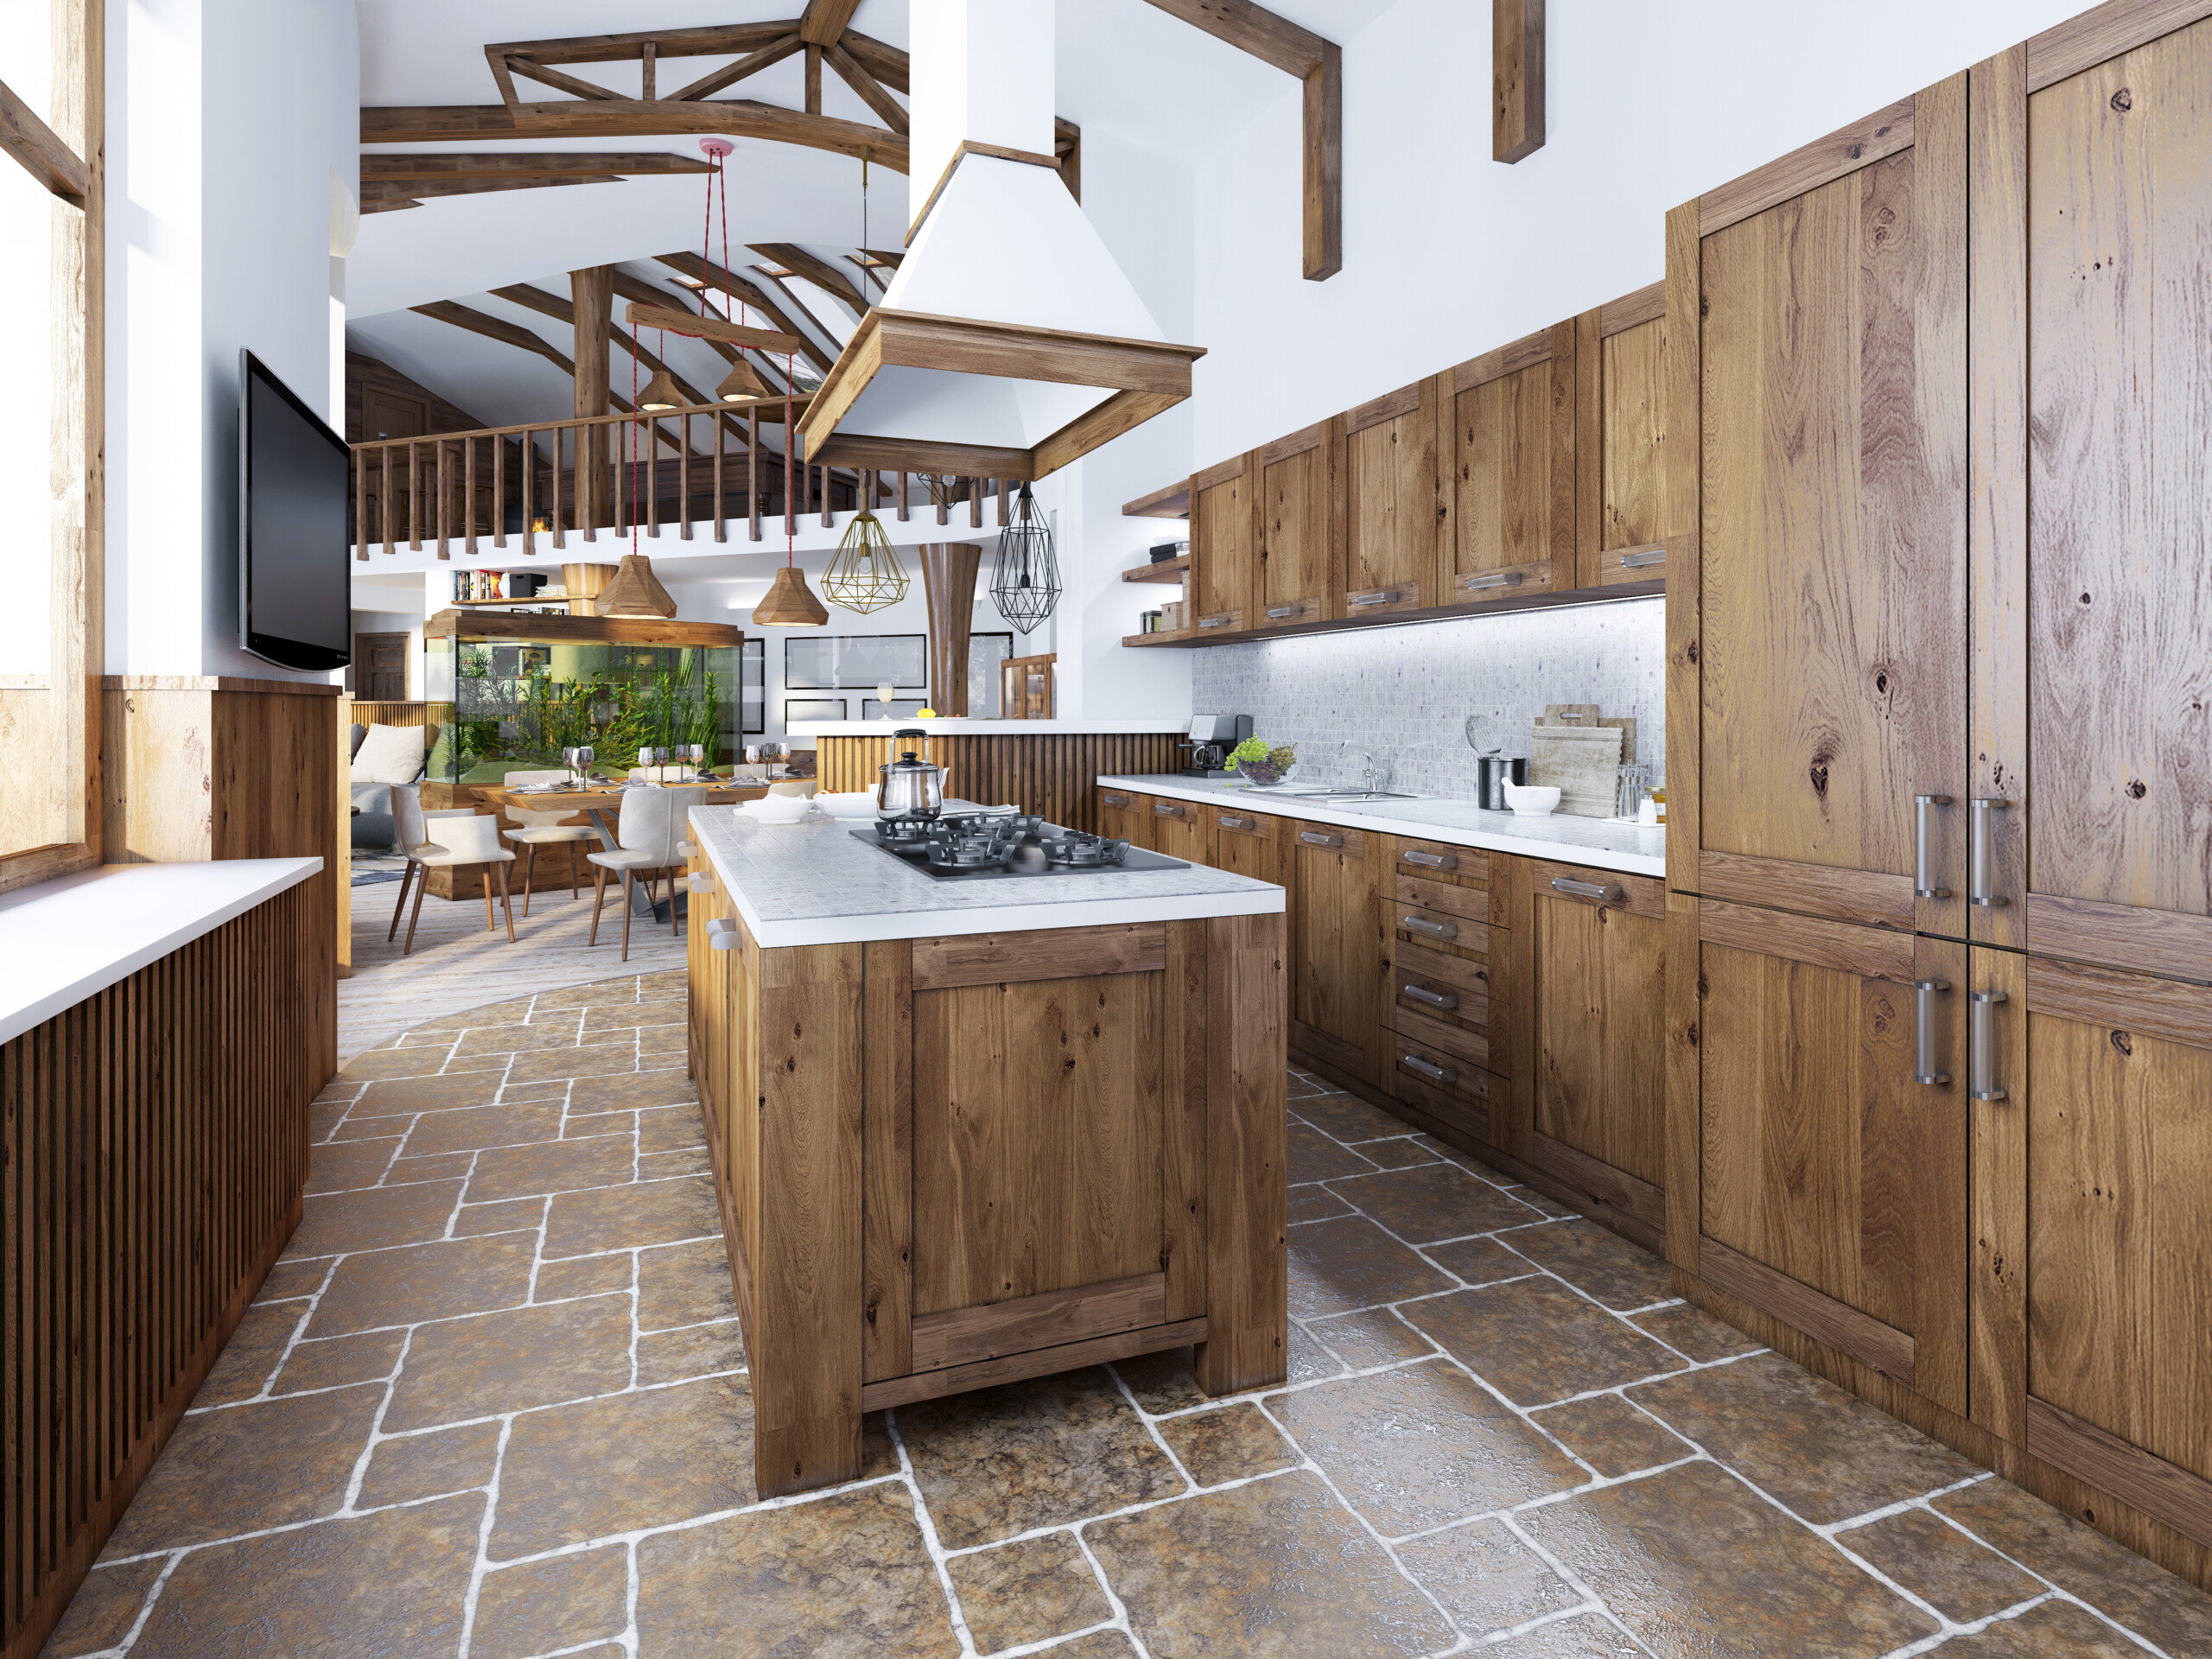 https://www.decoraid.com/wp-content/uploads/2021/04/country-kitchen-stone-flooring-scaled.jpeg